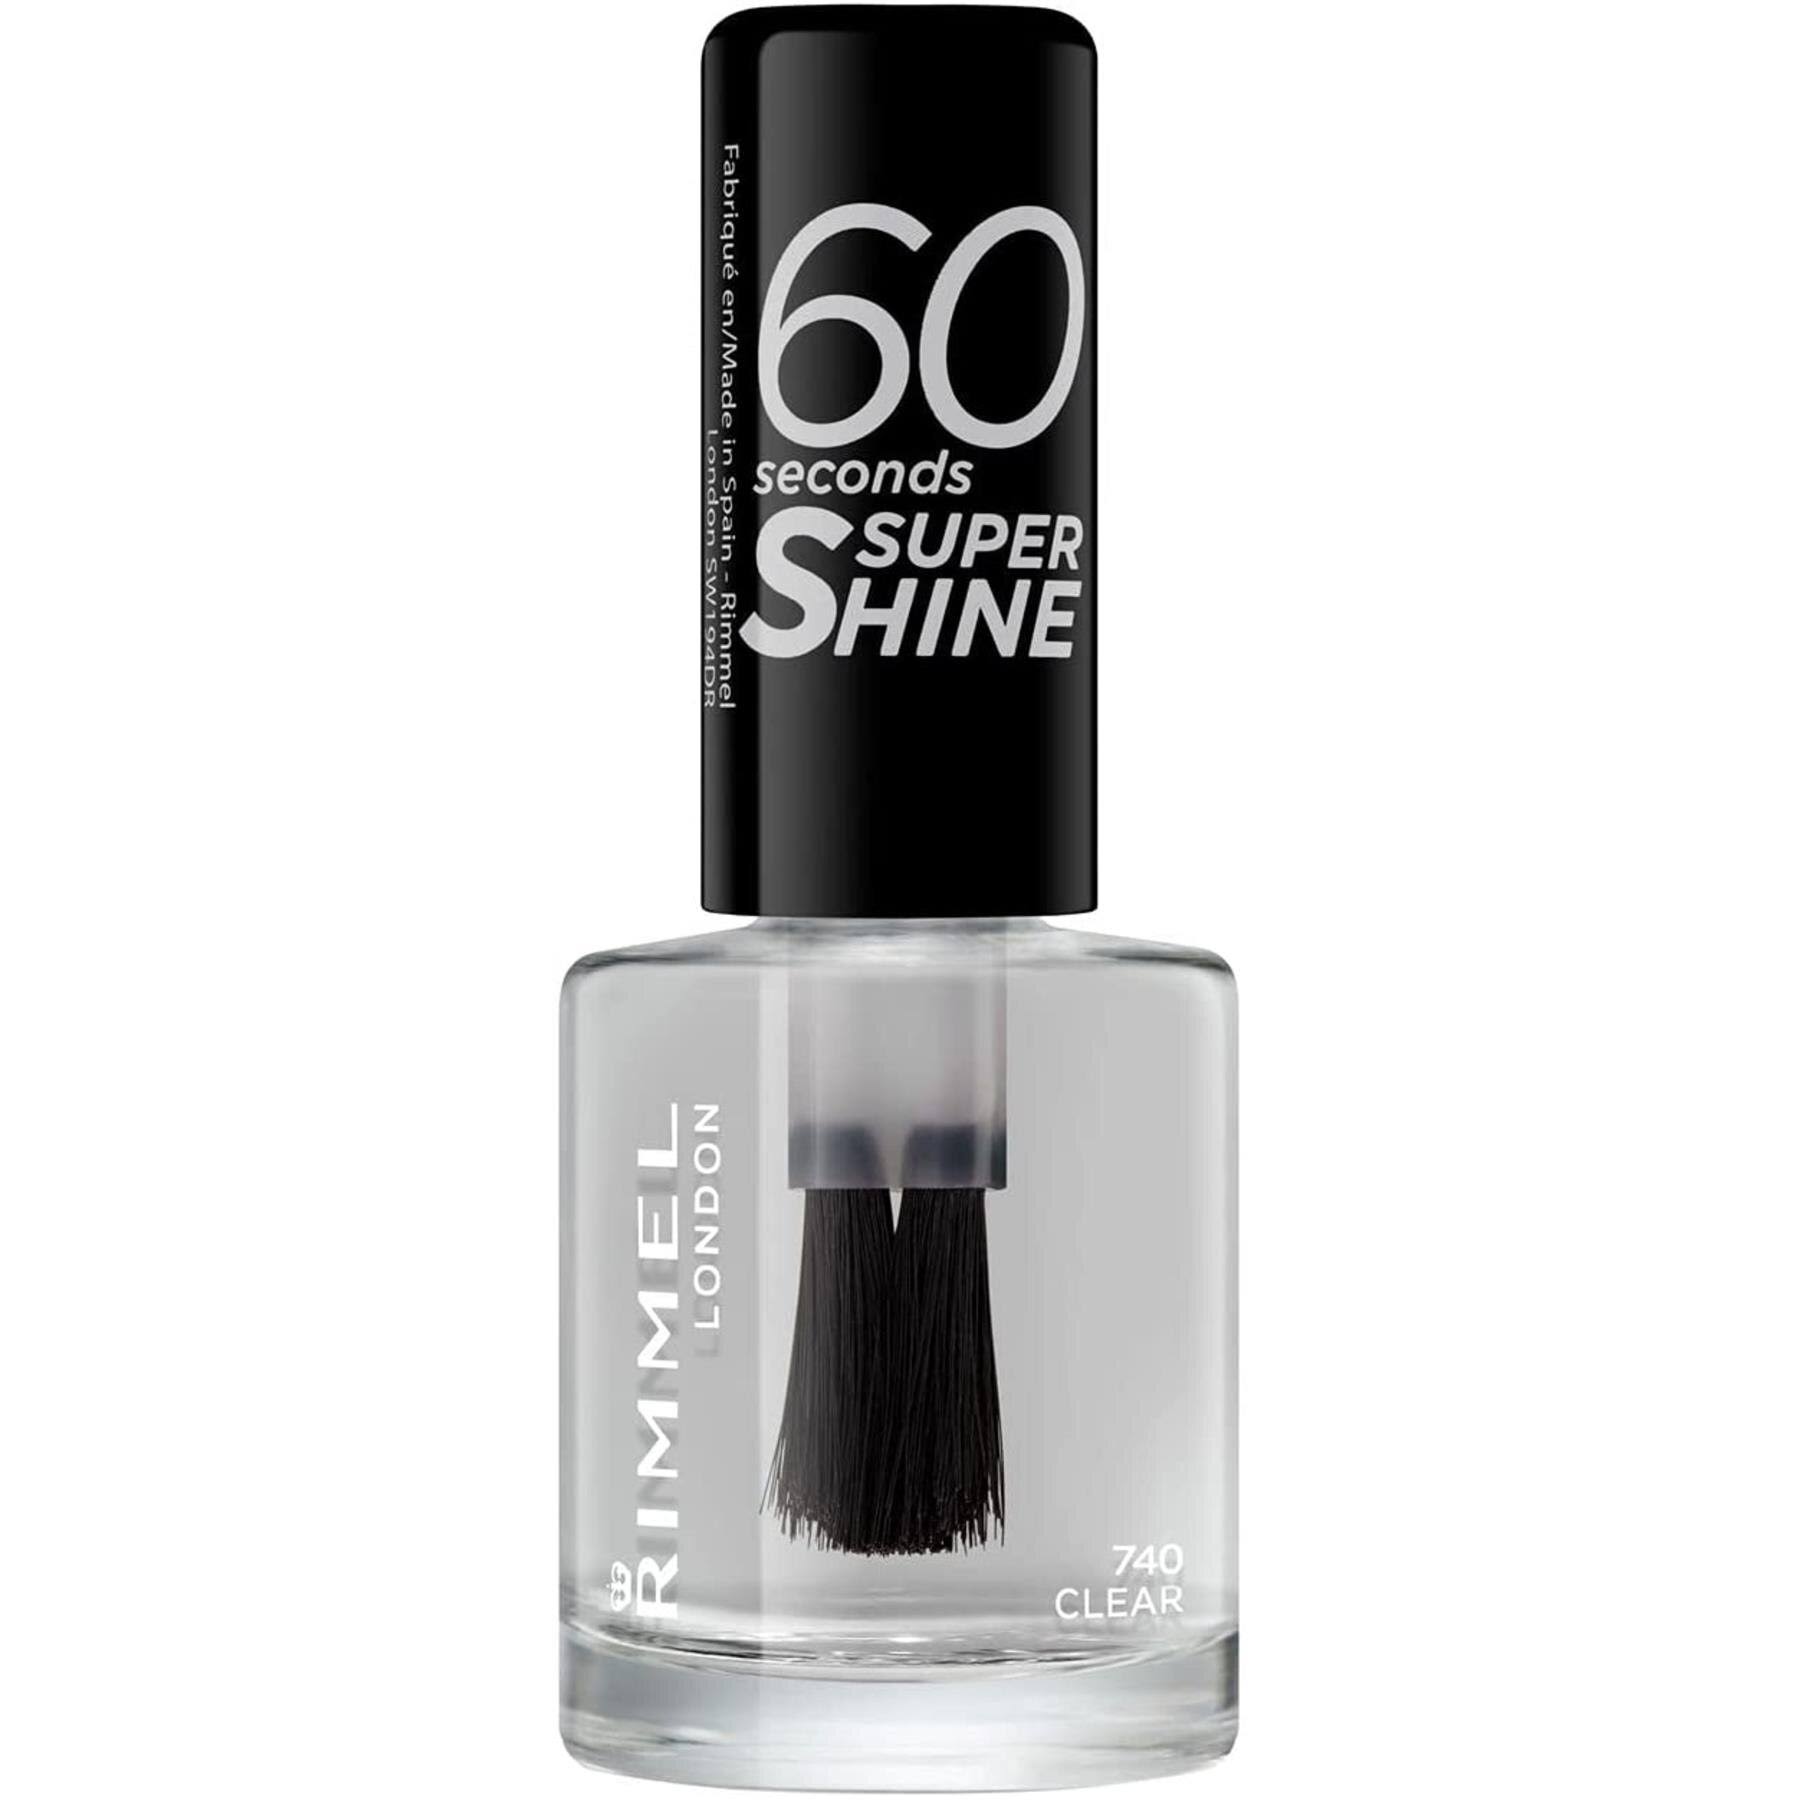 Rimmel London 60 Seconds Super Shine Nail Polish - 740 Clear, 8ml